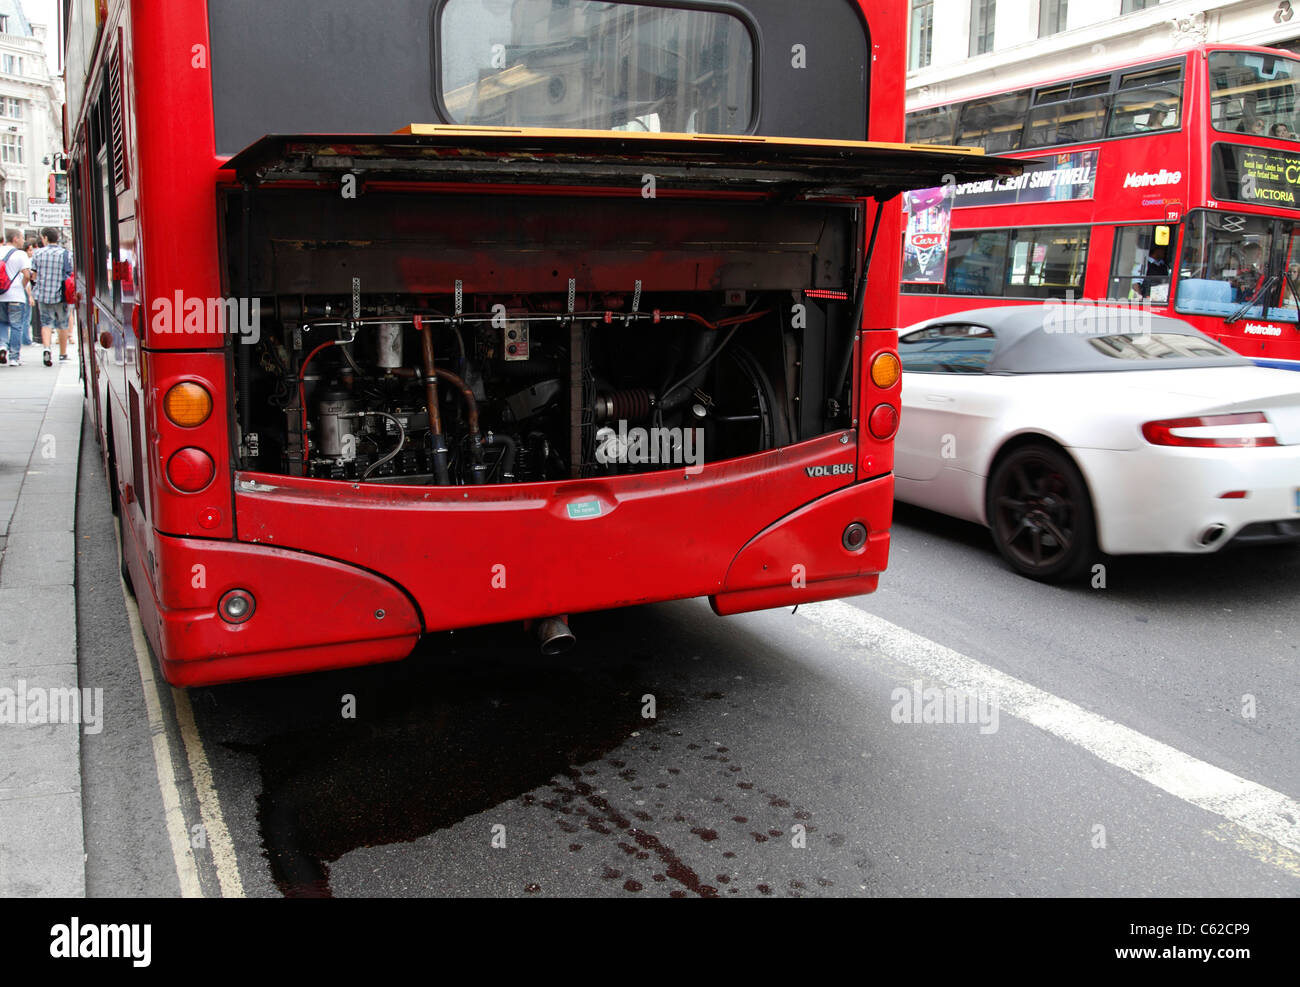 A London bus out of service due to mechanical failure on Regent Street, London, England, U.K. Stock Photo